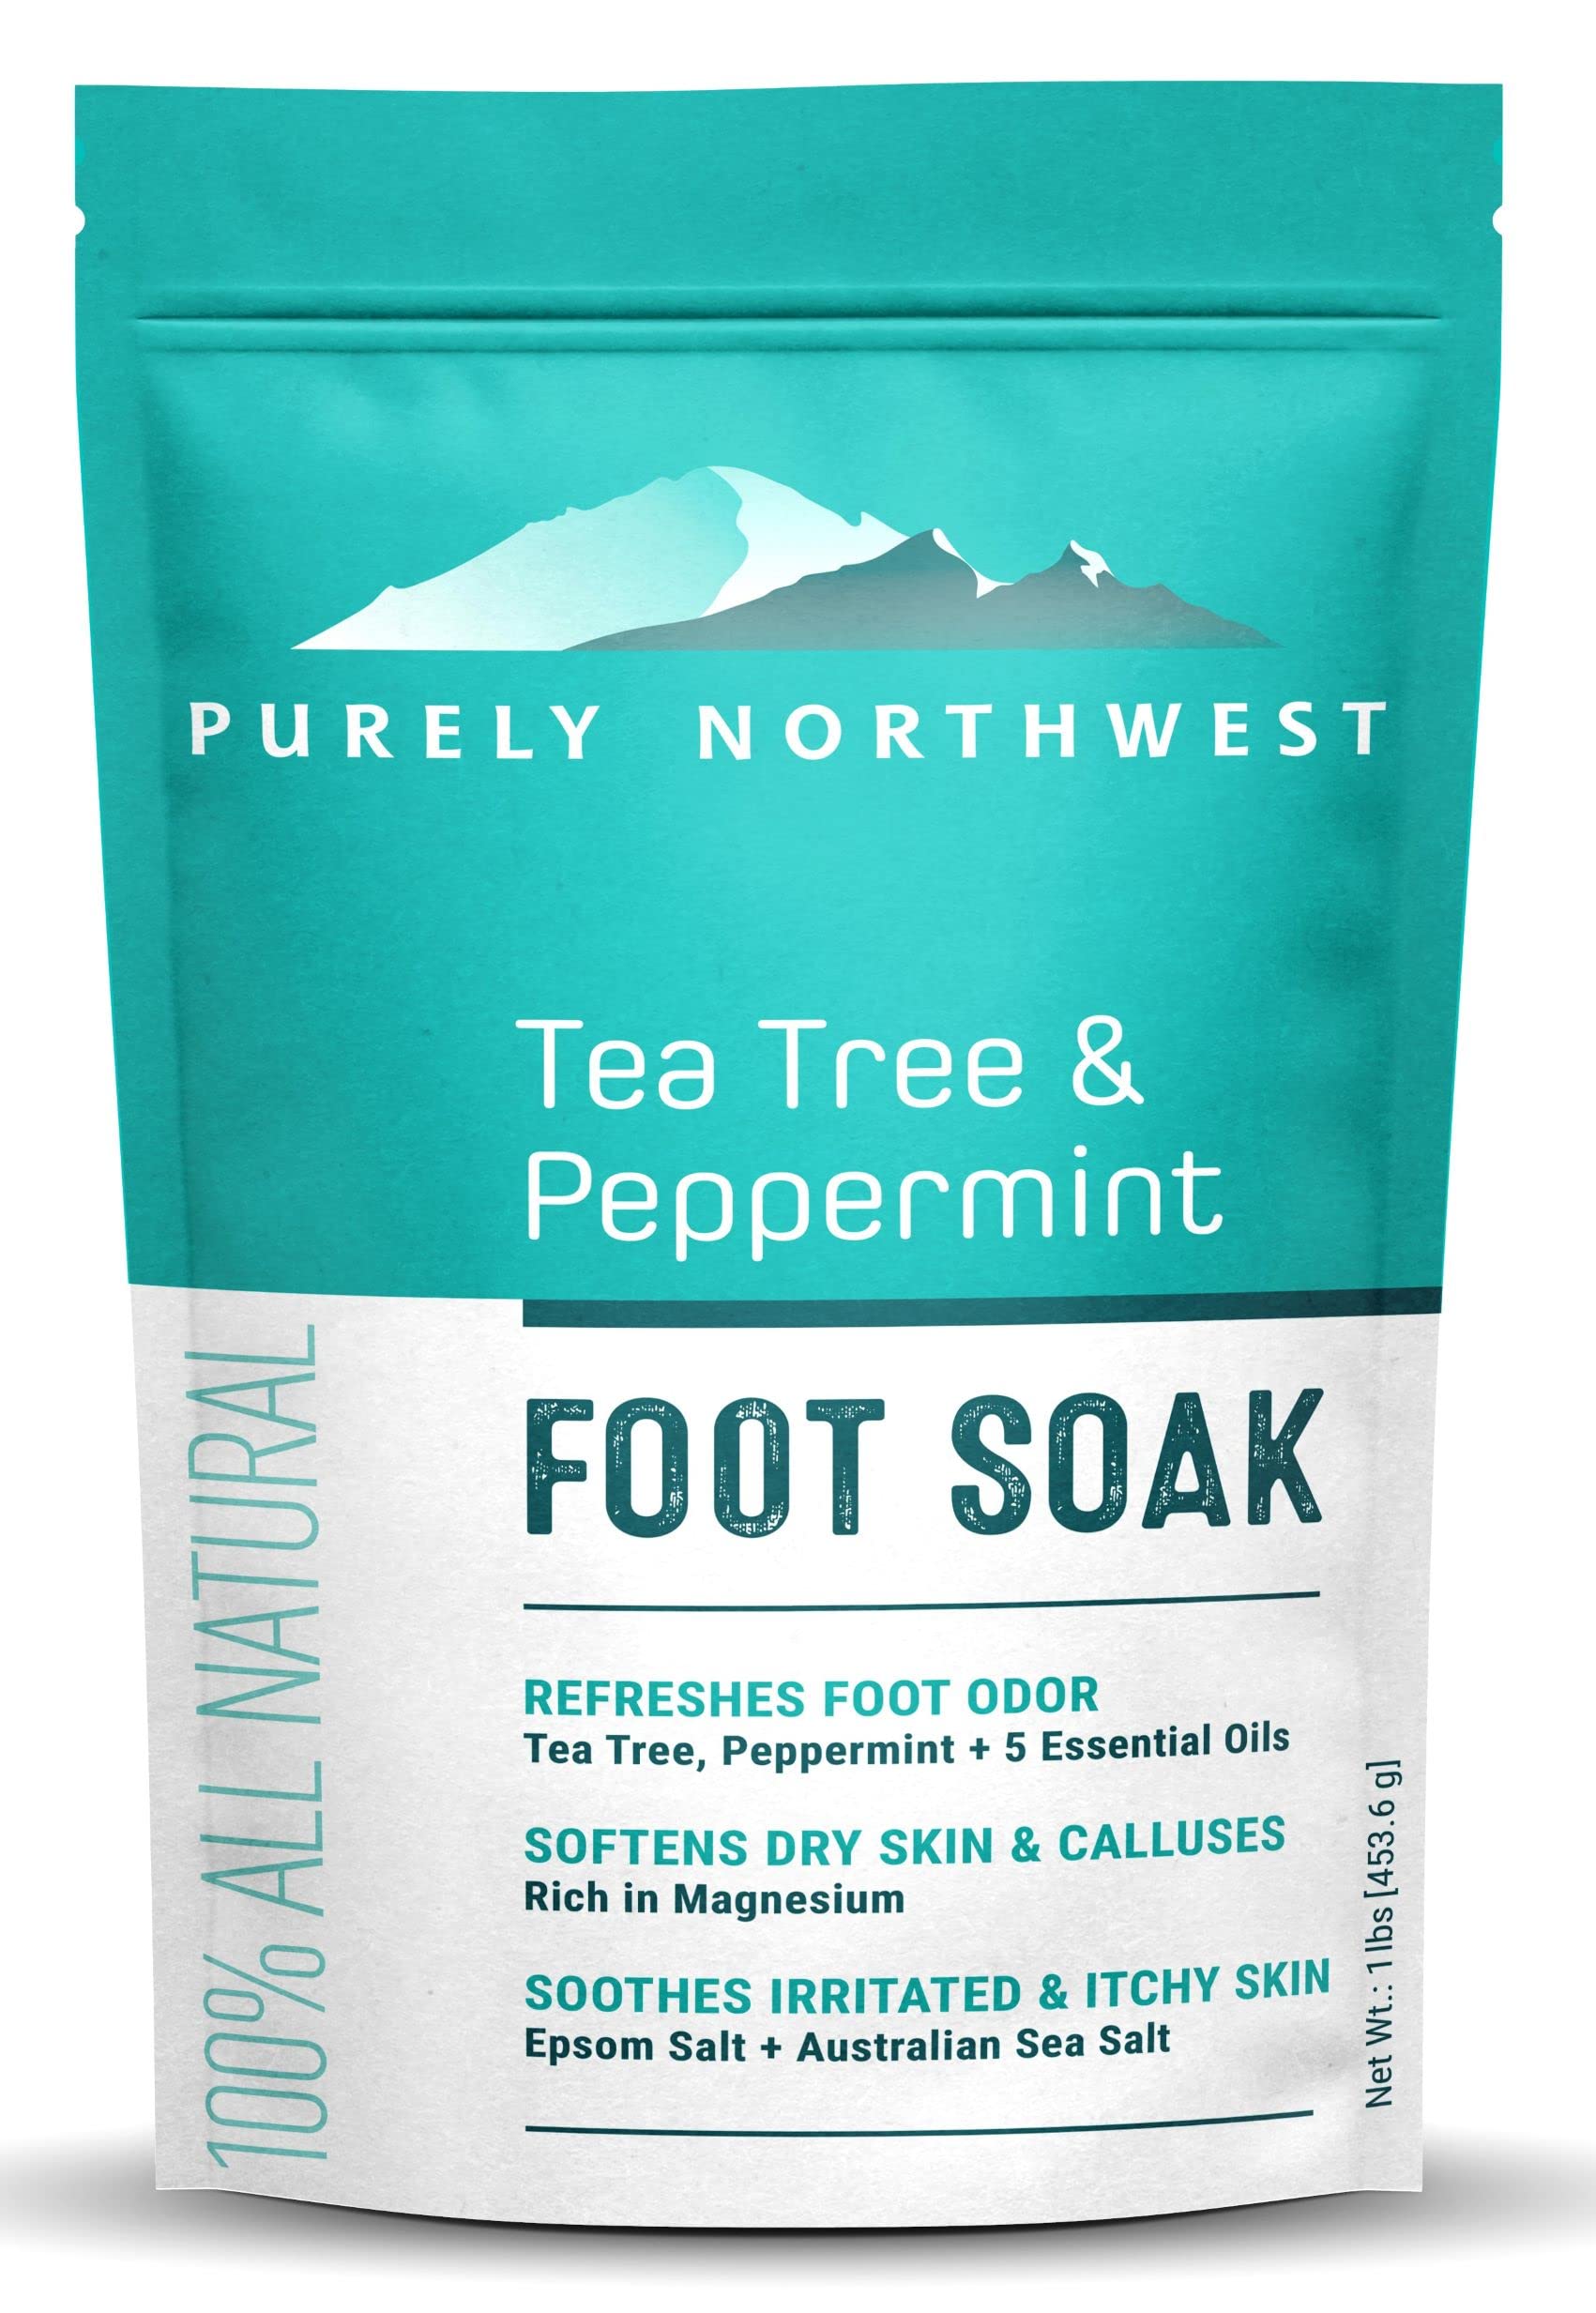 Amazon.com: PURELY NORTHWEST-Tea Tree Oil & Peppermint Foot Soak